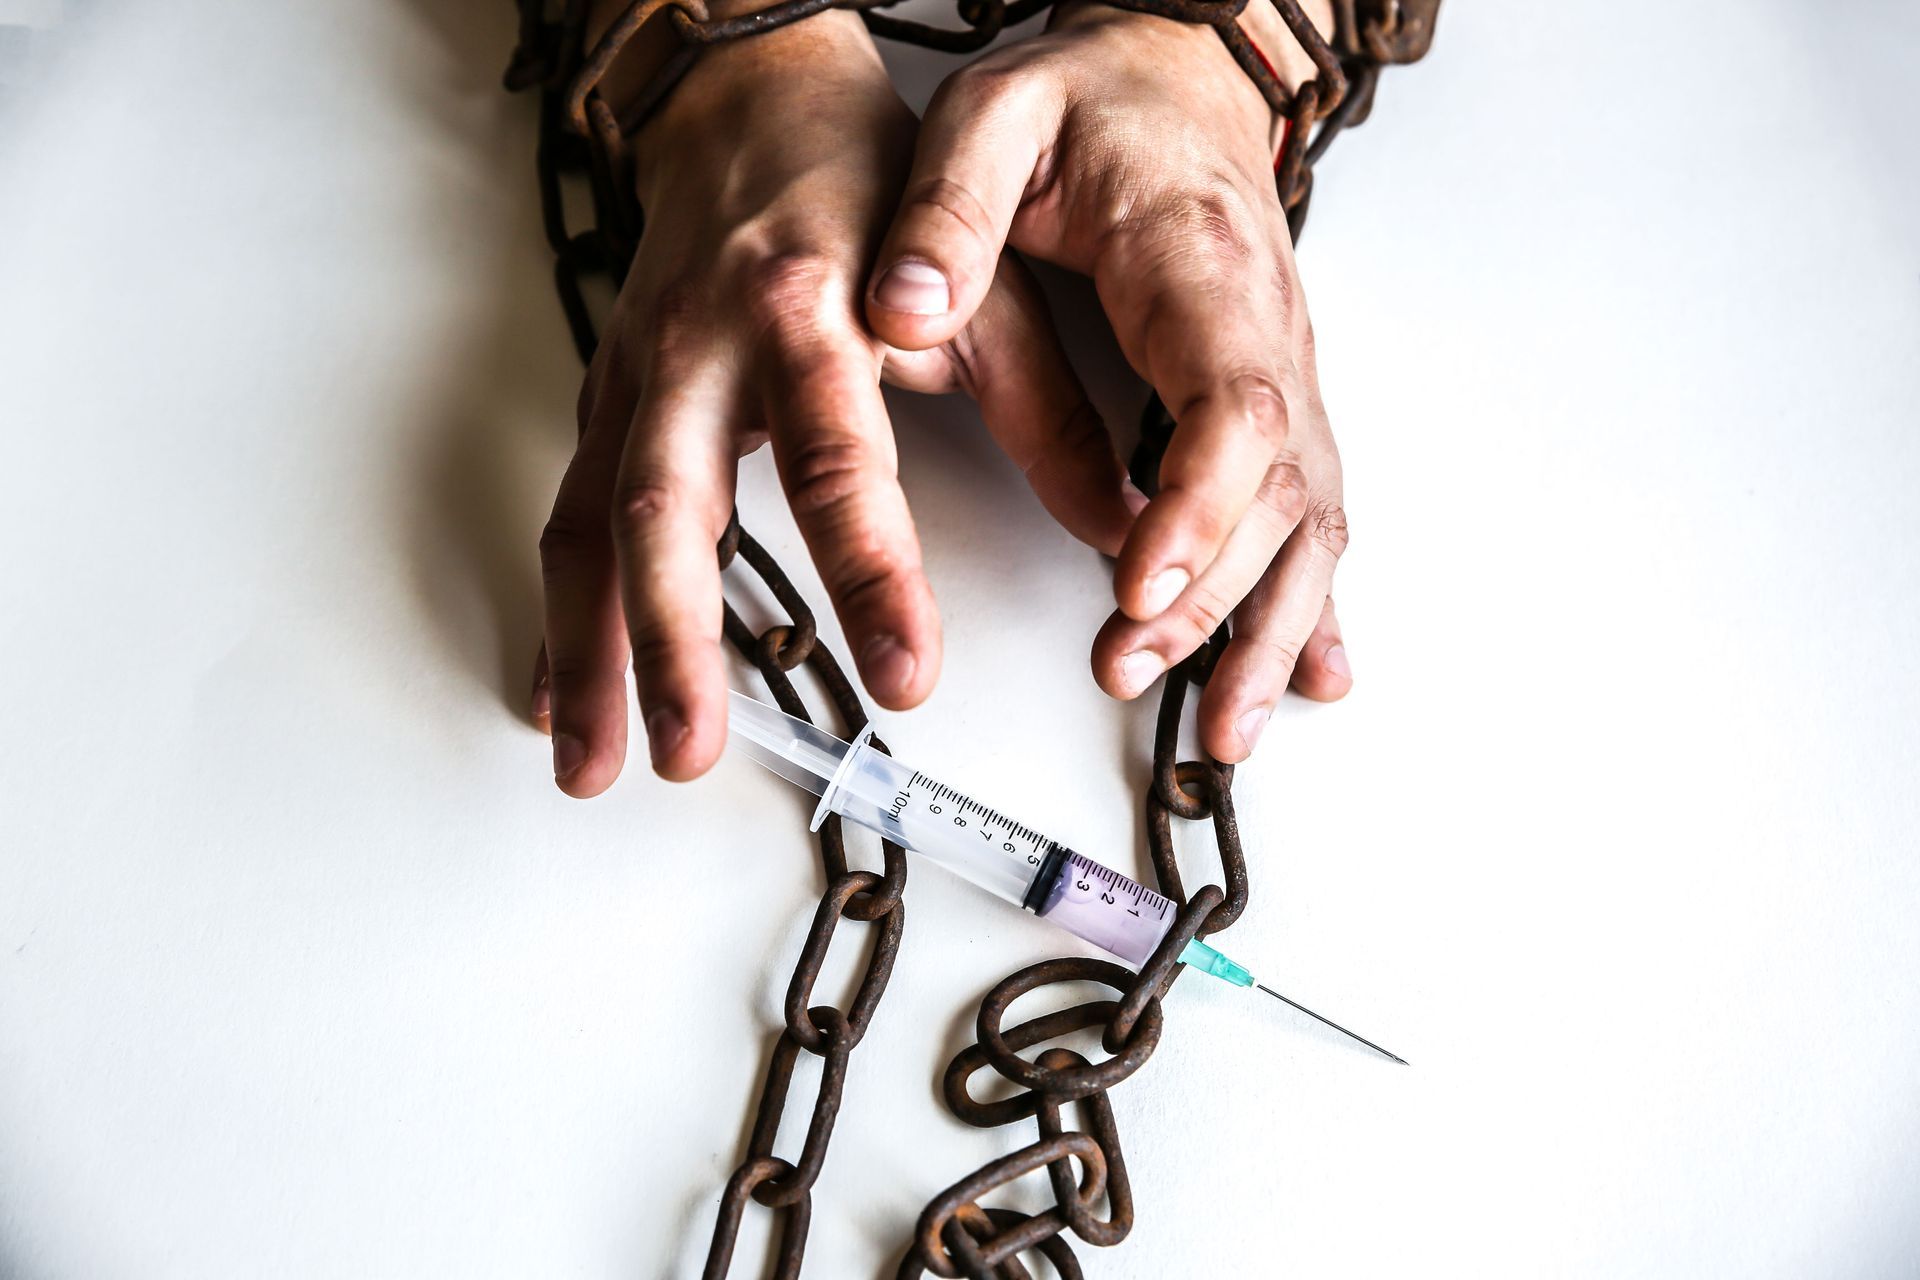 Handcuffed man with syringe